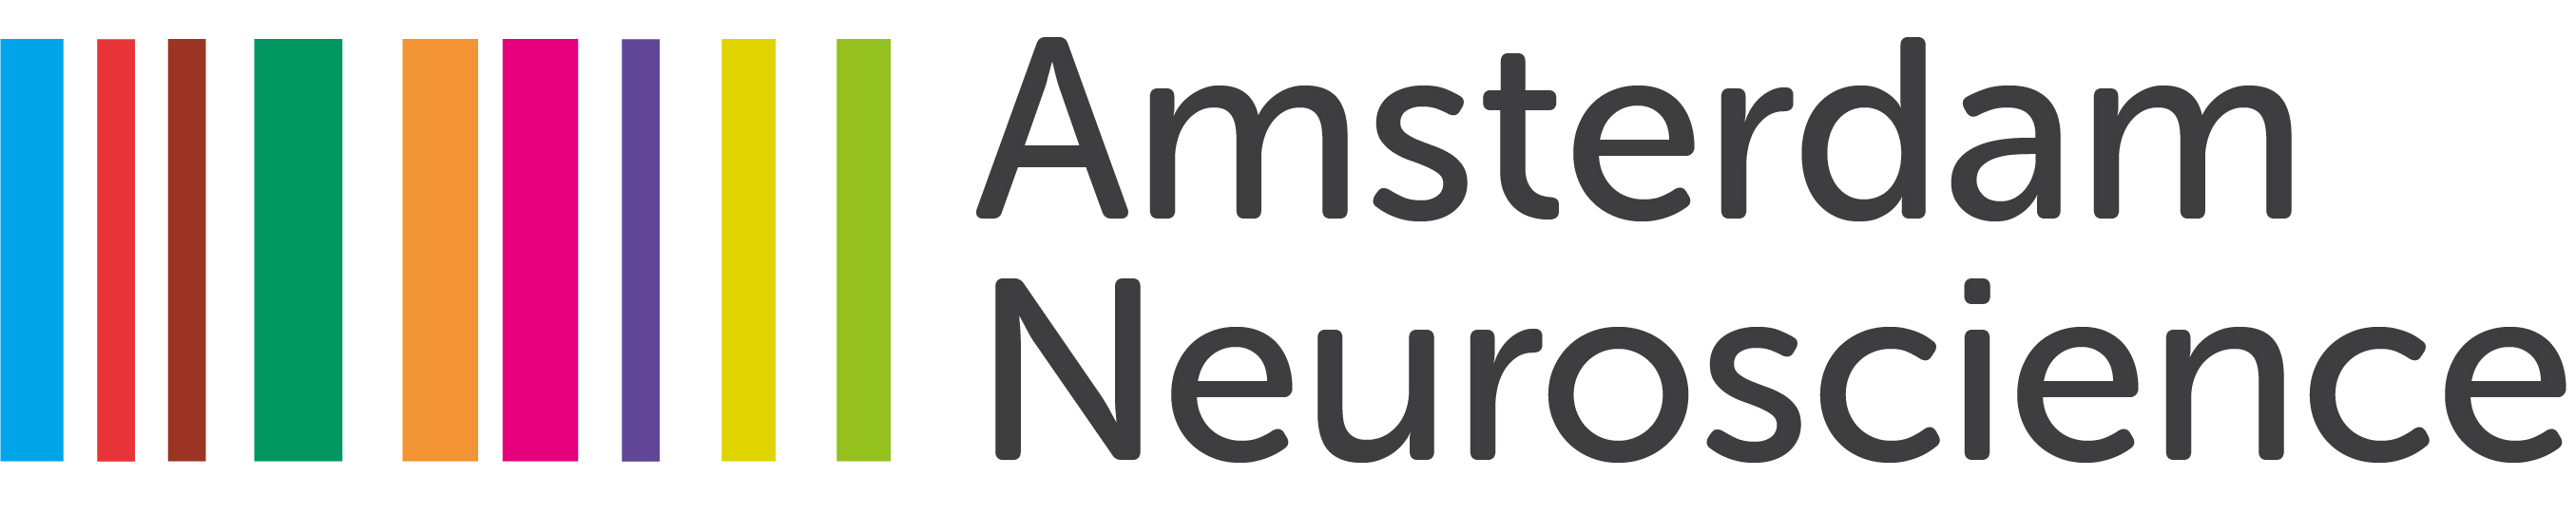 Logo of Amsterdam Neuroscience research institute